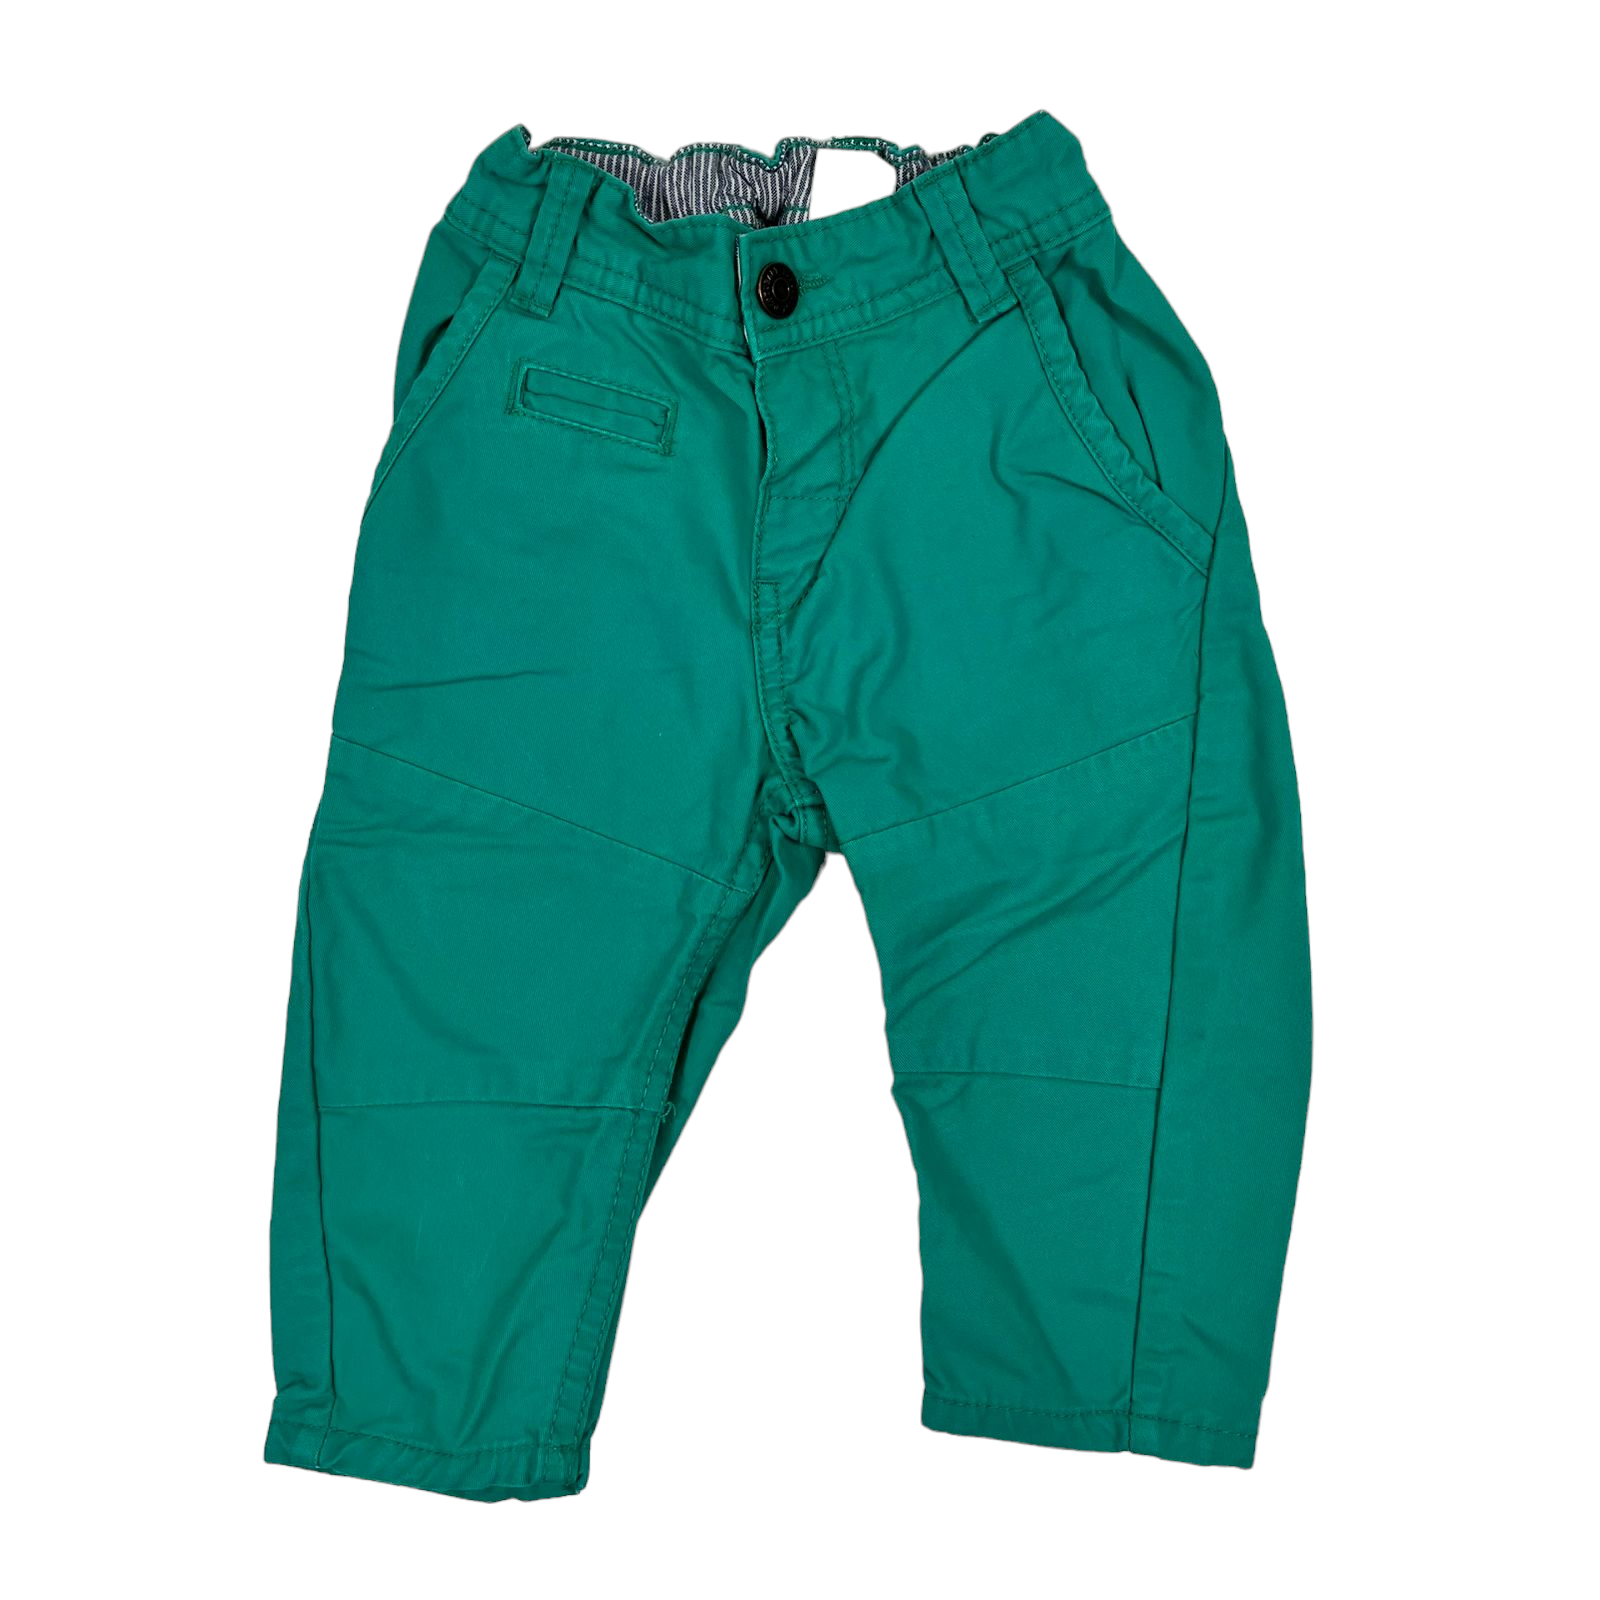 Pantalon verde (turqueza) con pretina y bolsillos